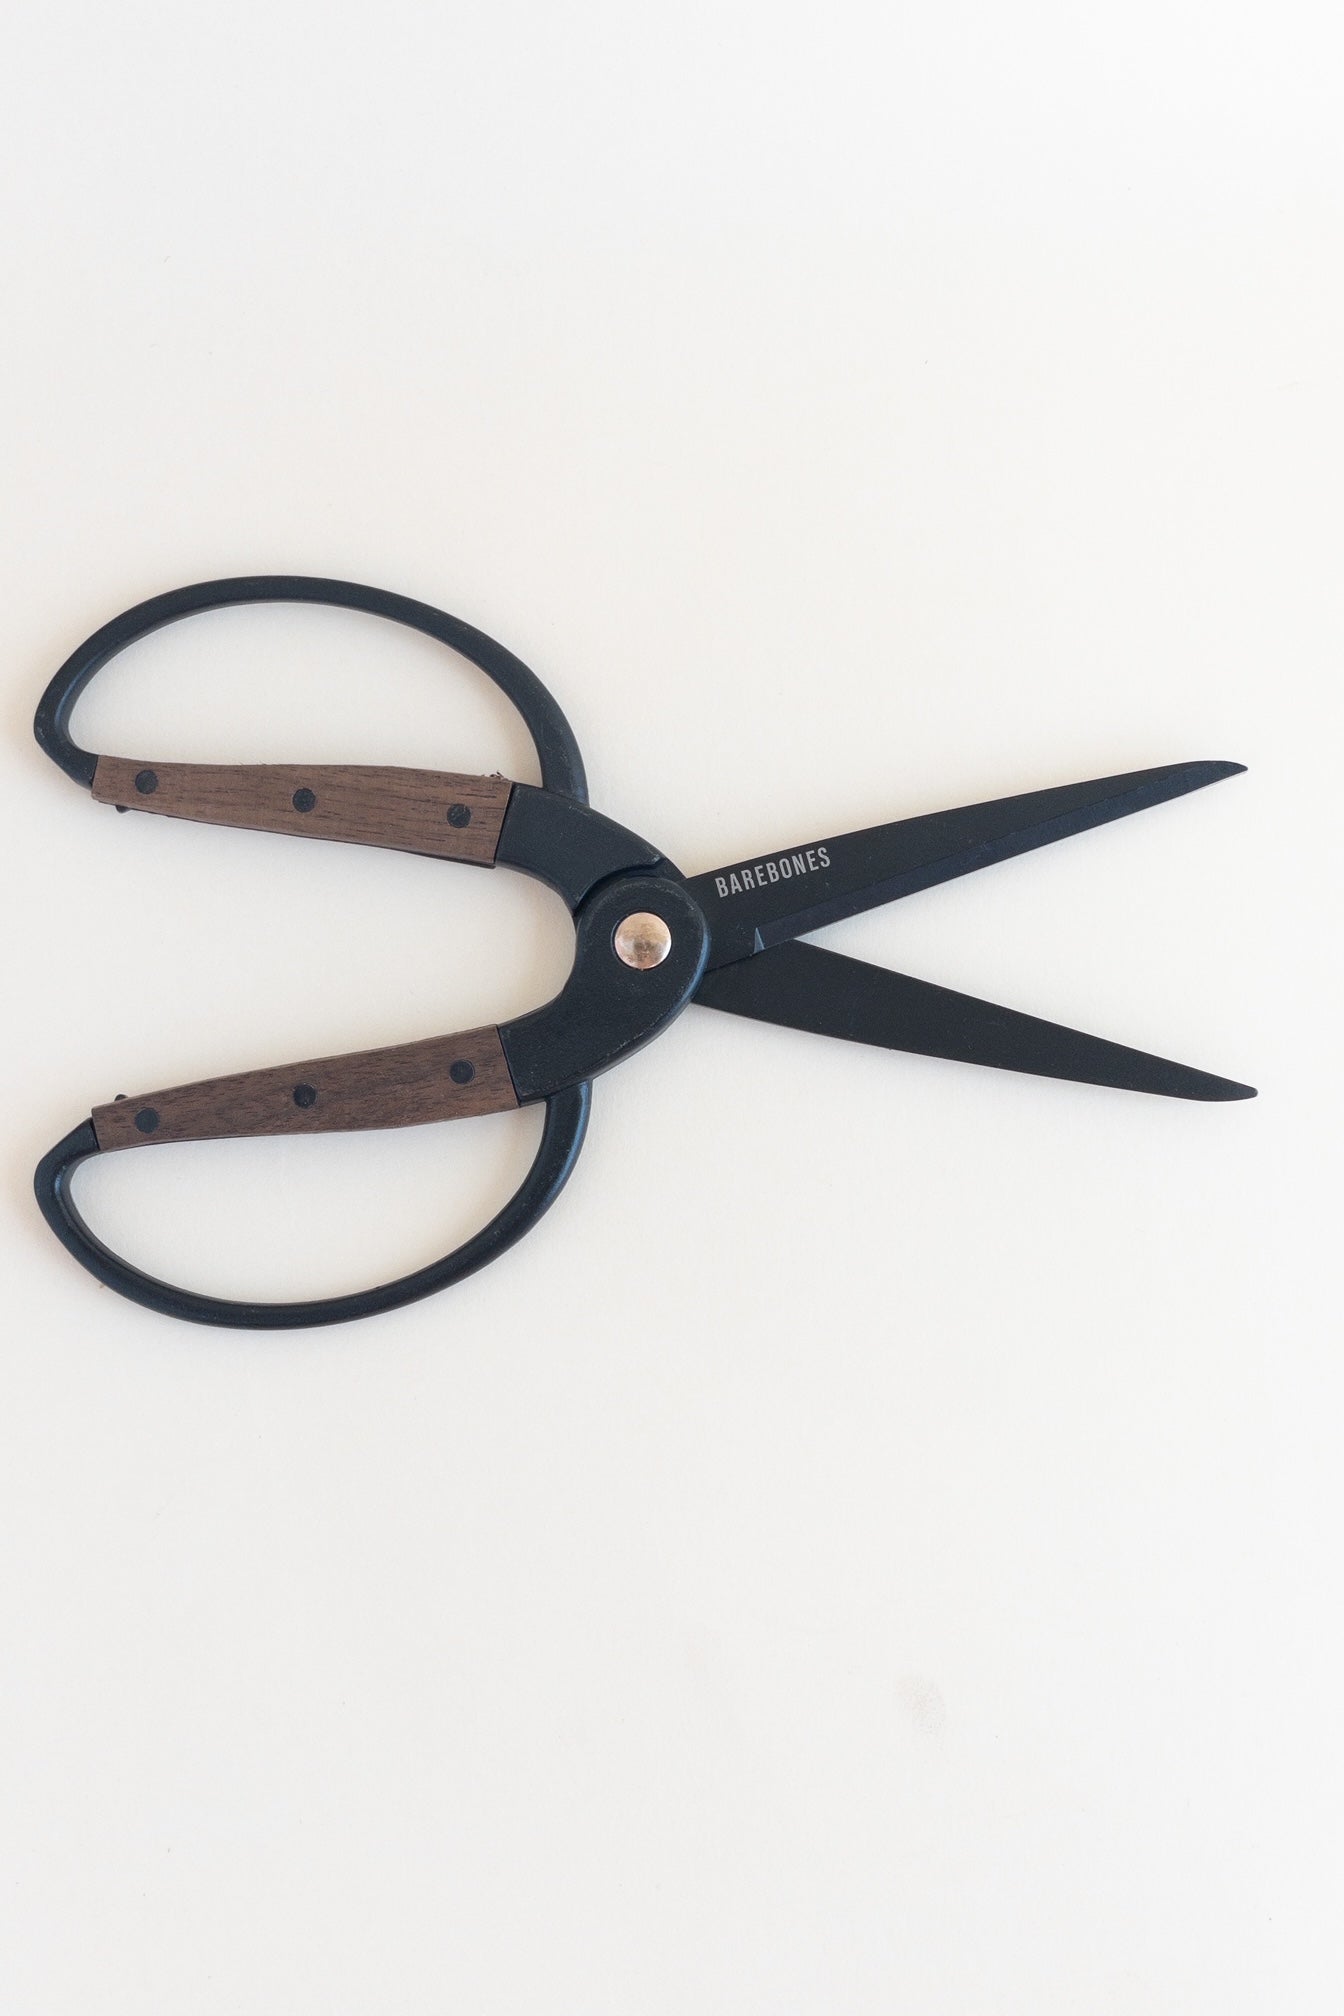 Garden Scissors - Large